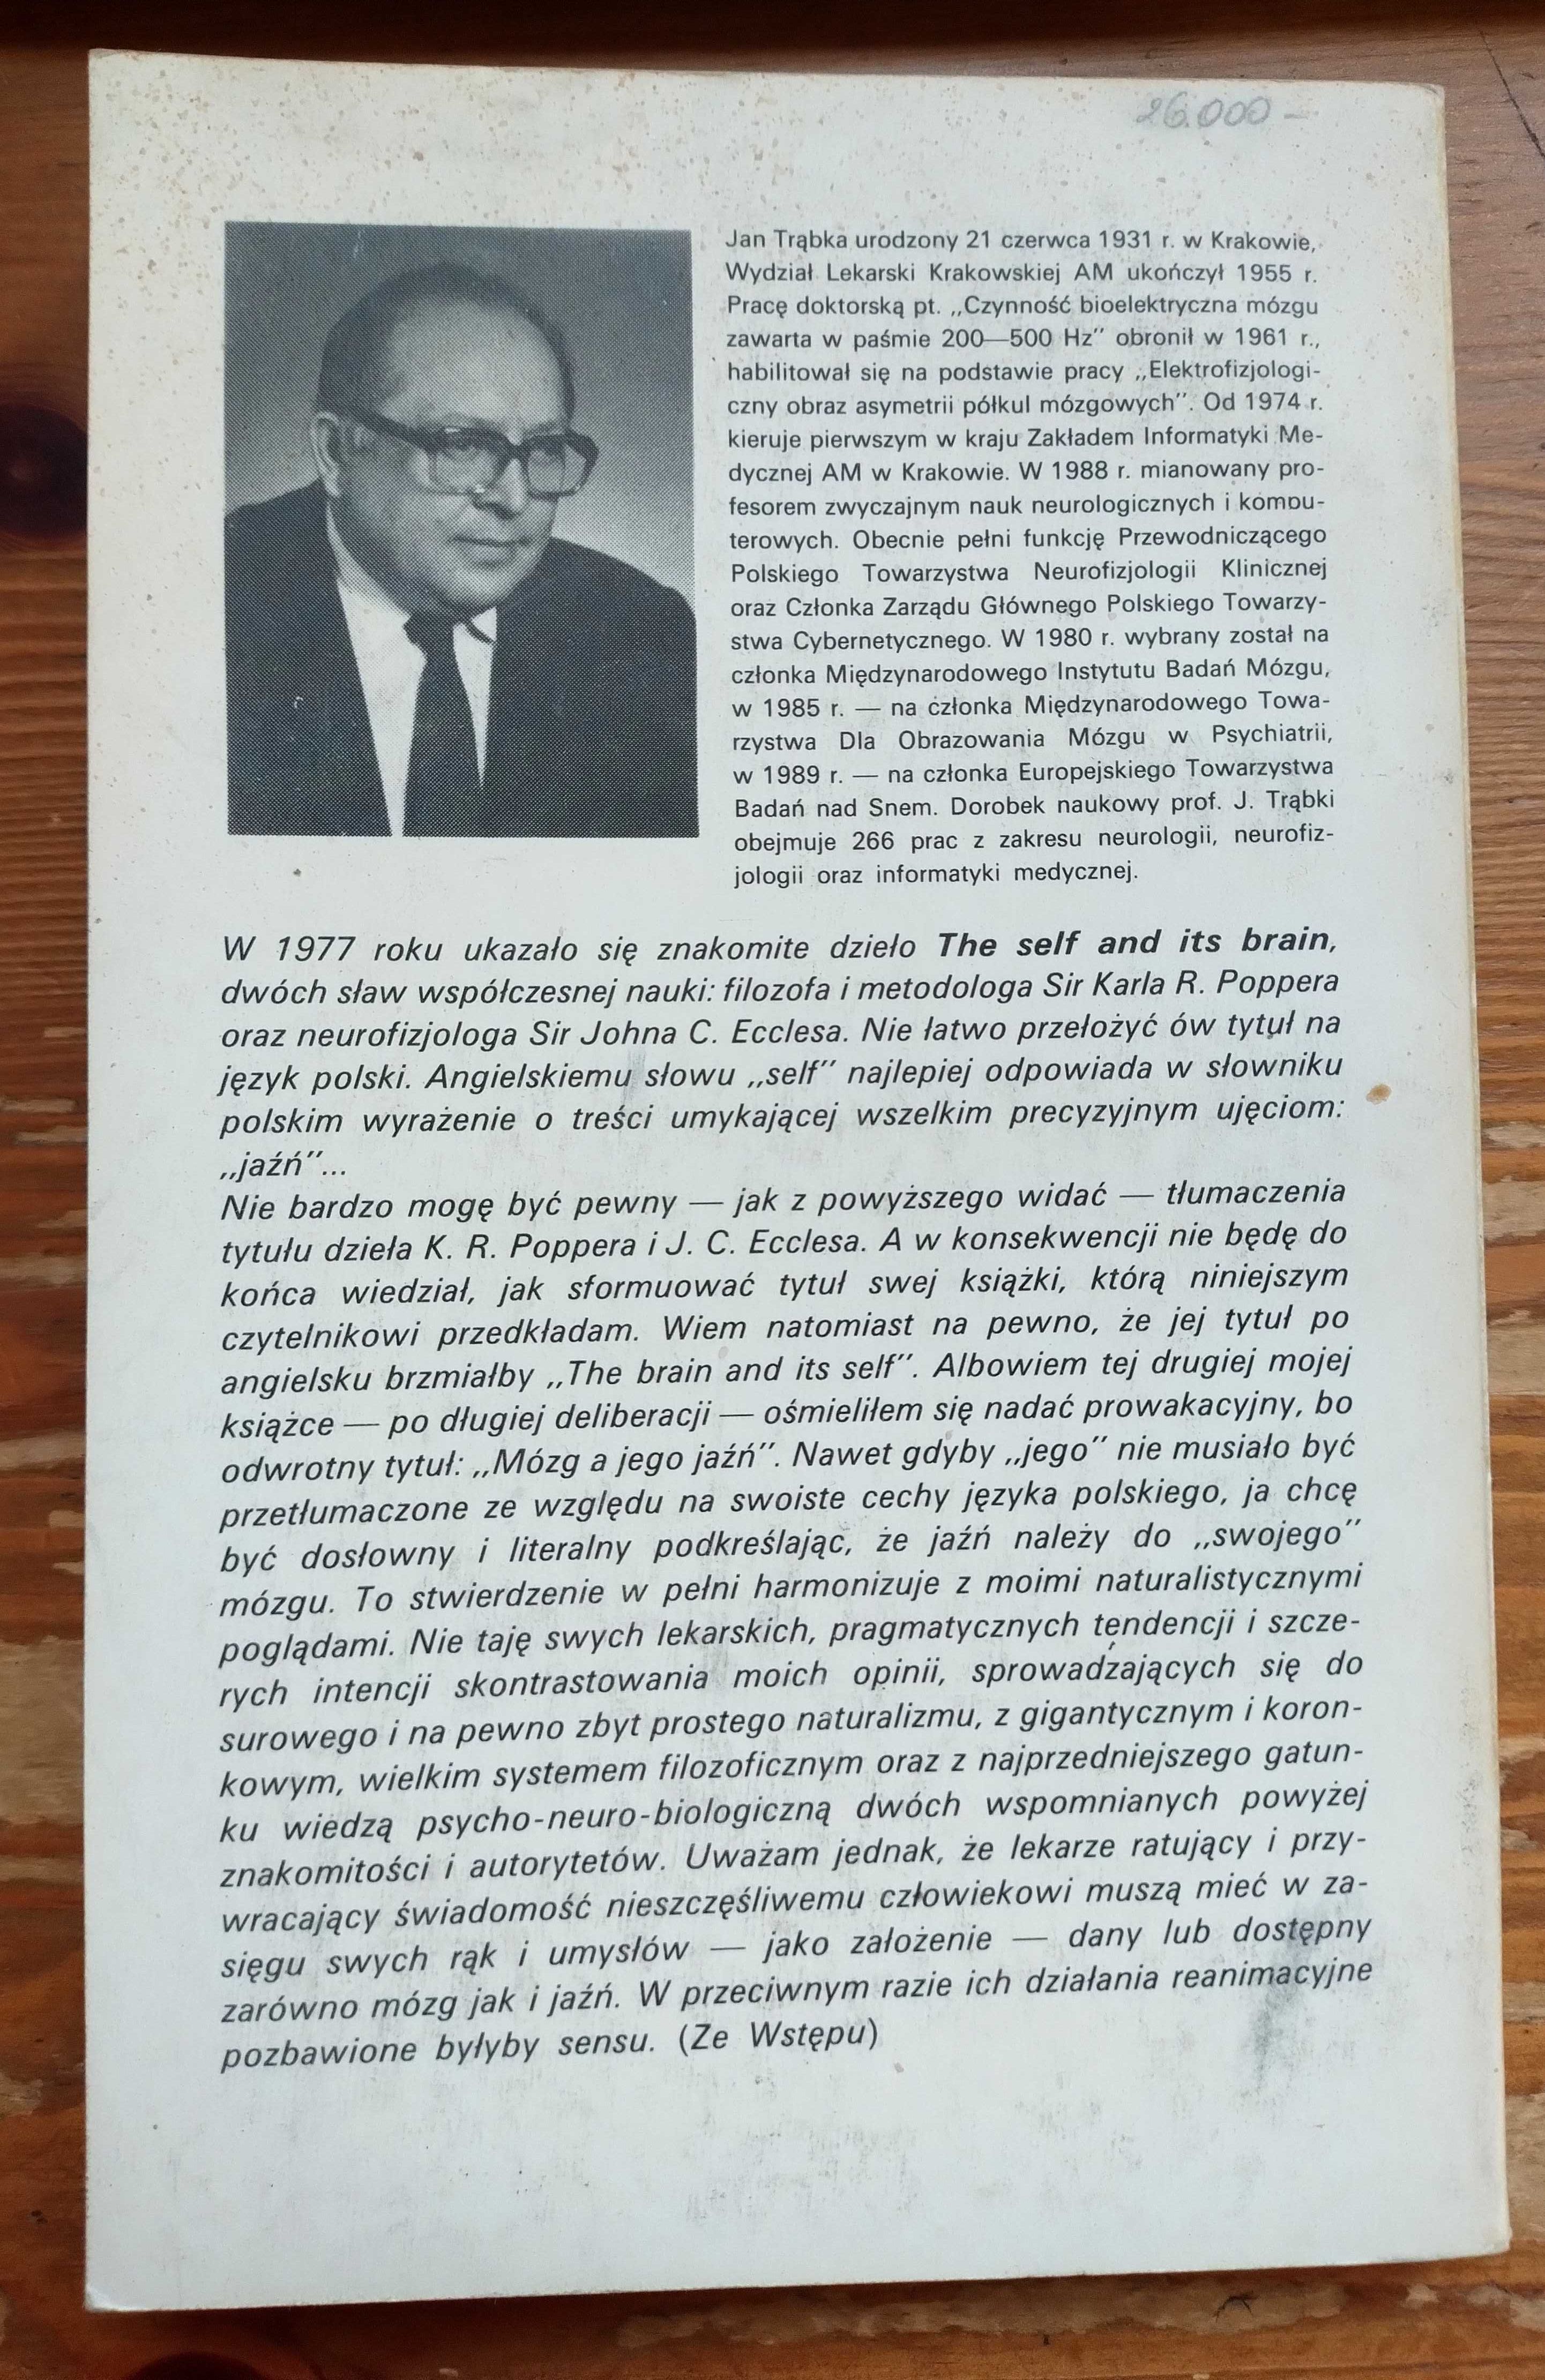 Mózg a jego jaźń - Jan Trąbka, 1991 rok